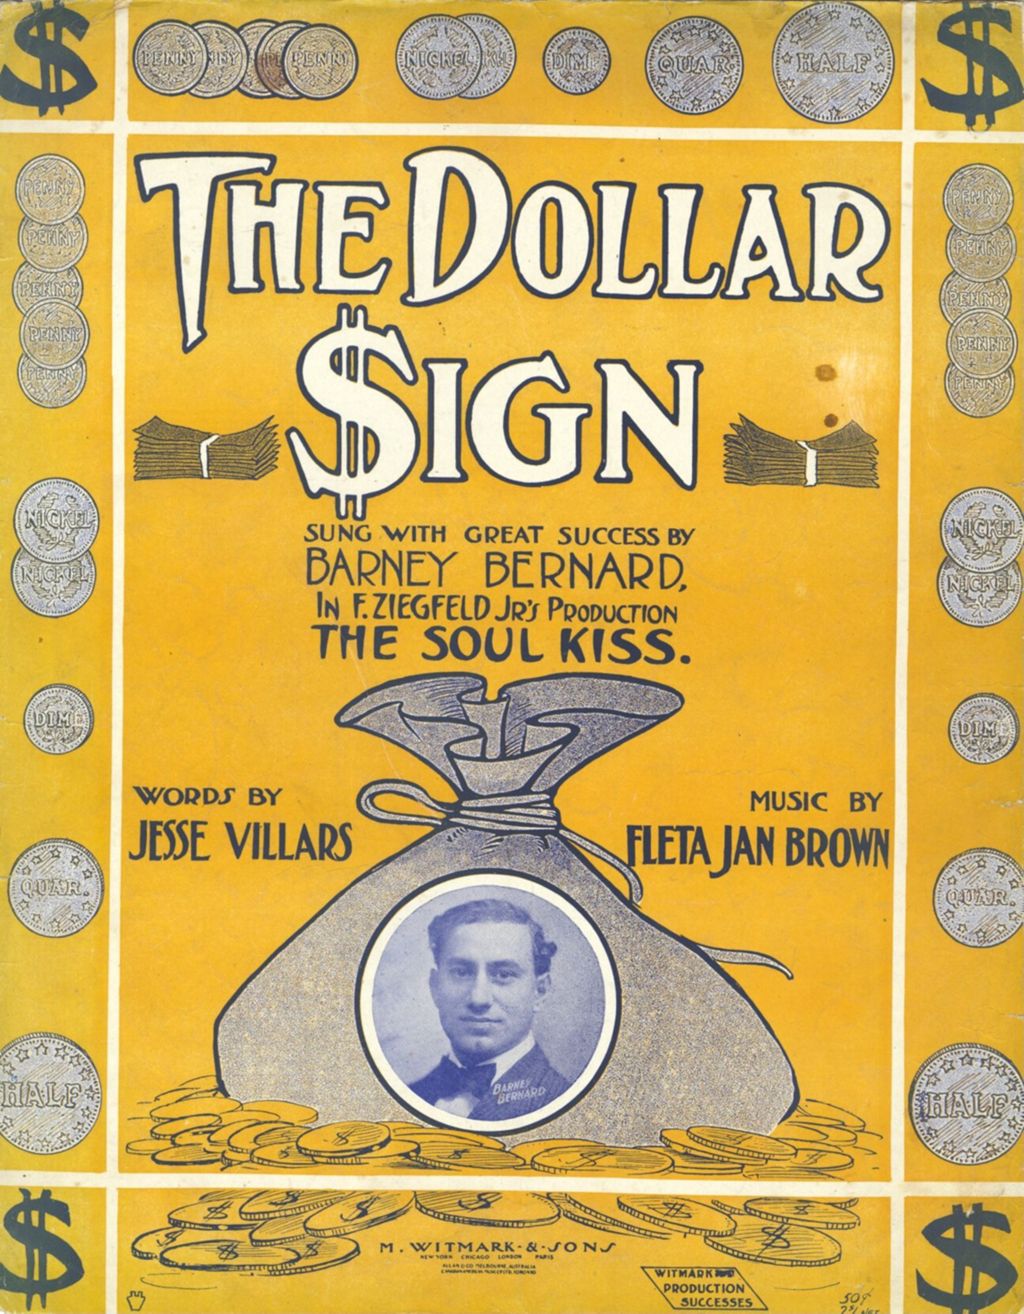 Miniature of Dollar Sign